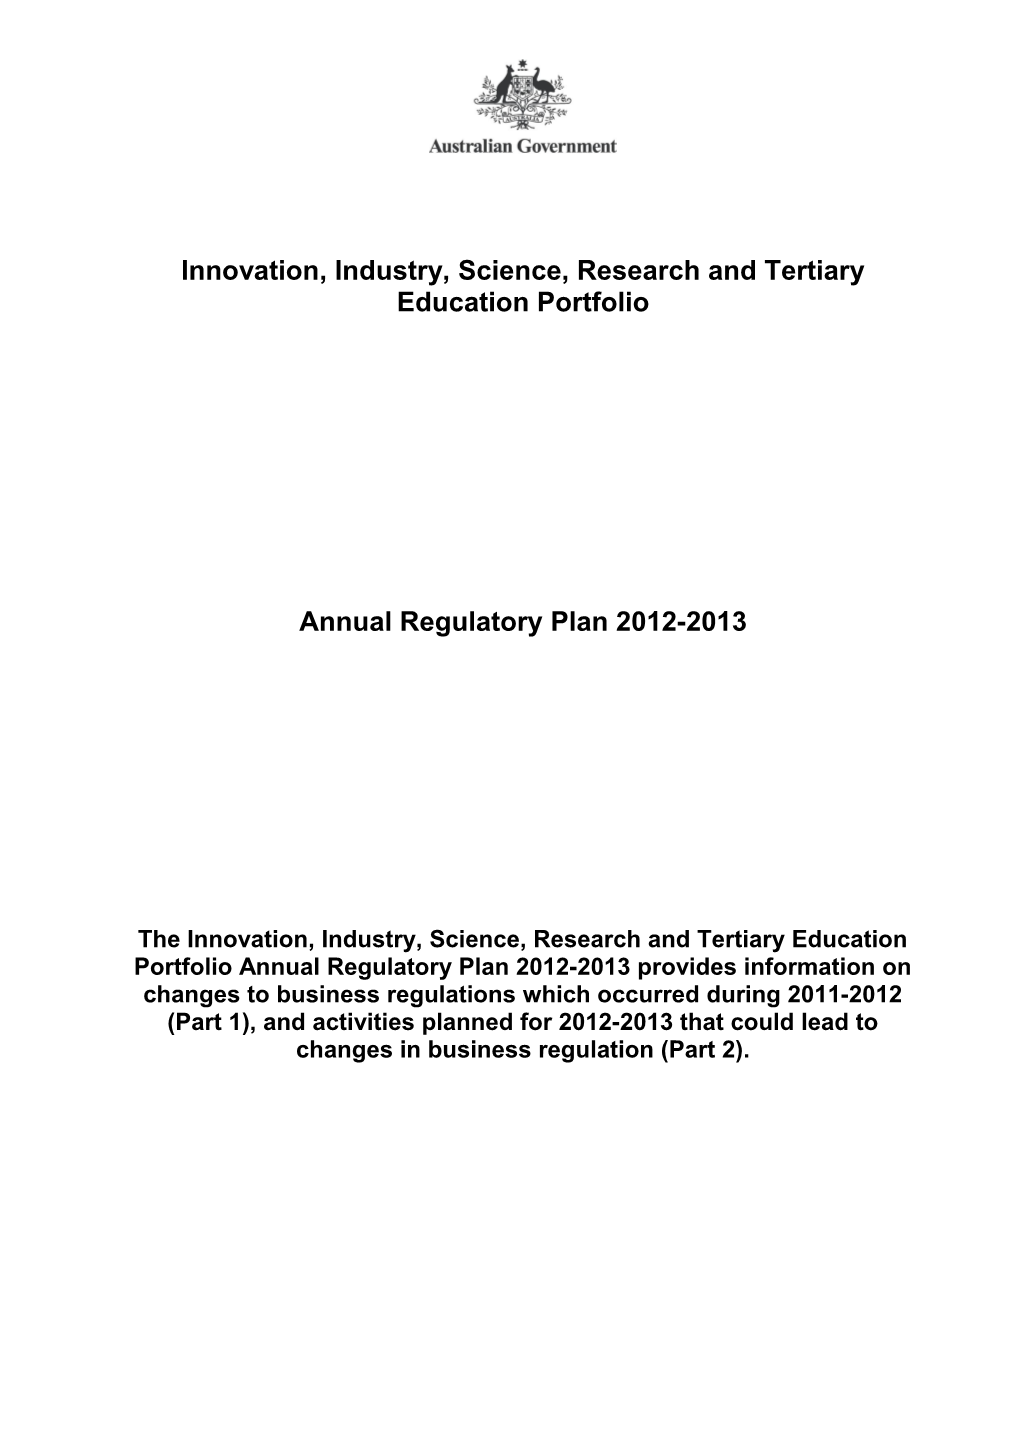 Annual Regulatory Plan s1